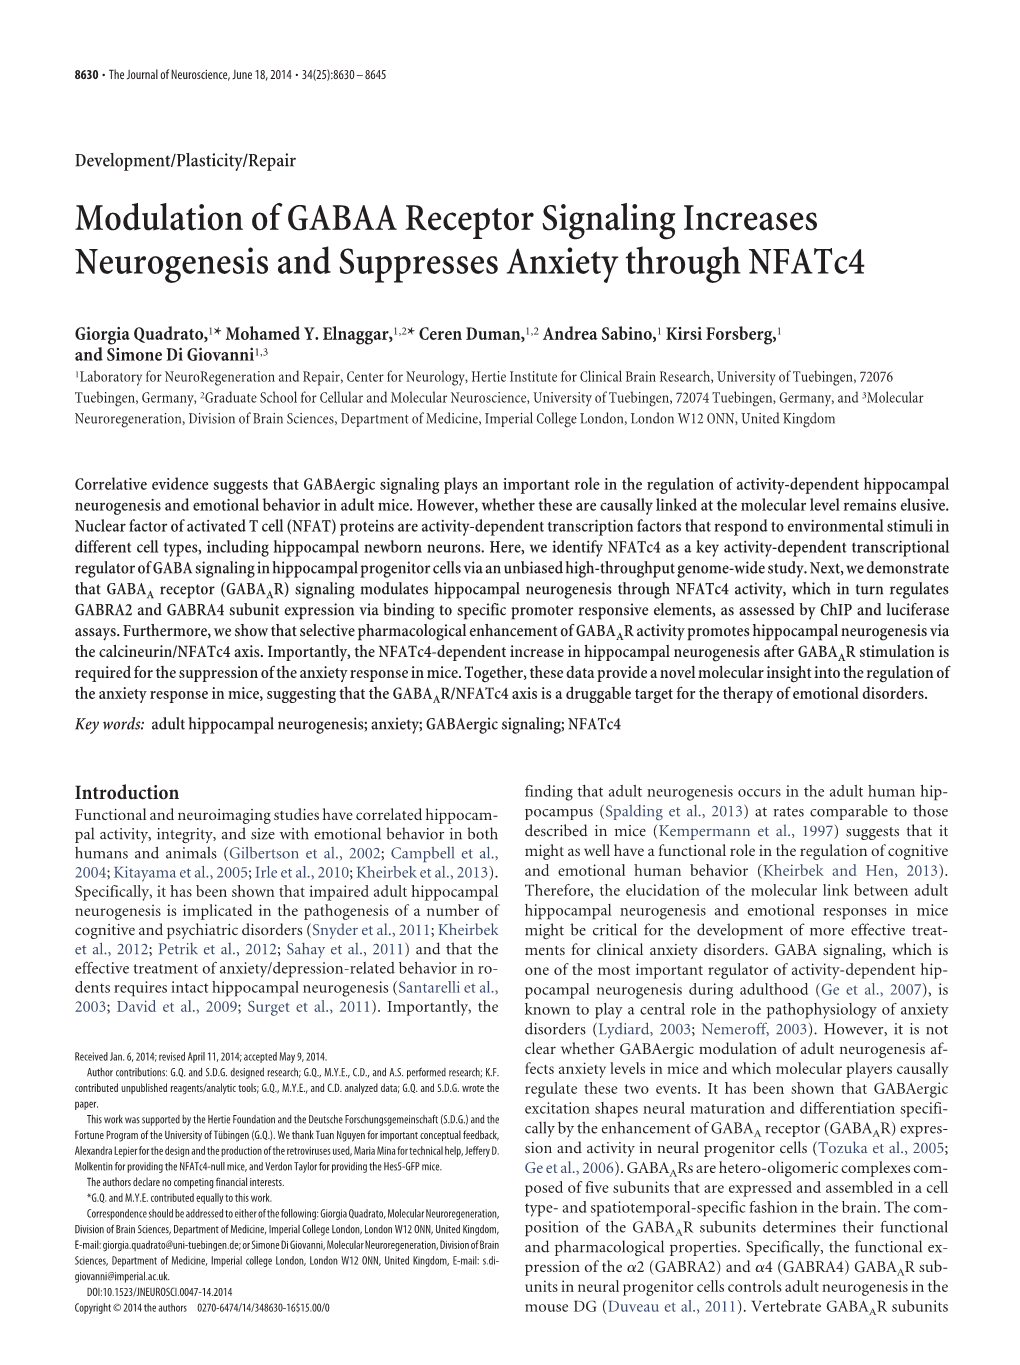 Modulation of GABAA Receptor Signaling Increases Neurogenesis and Suppresses Anxiety Through Nfatc4